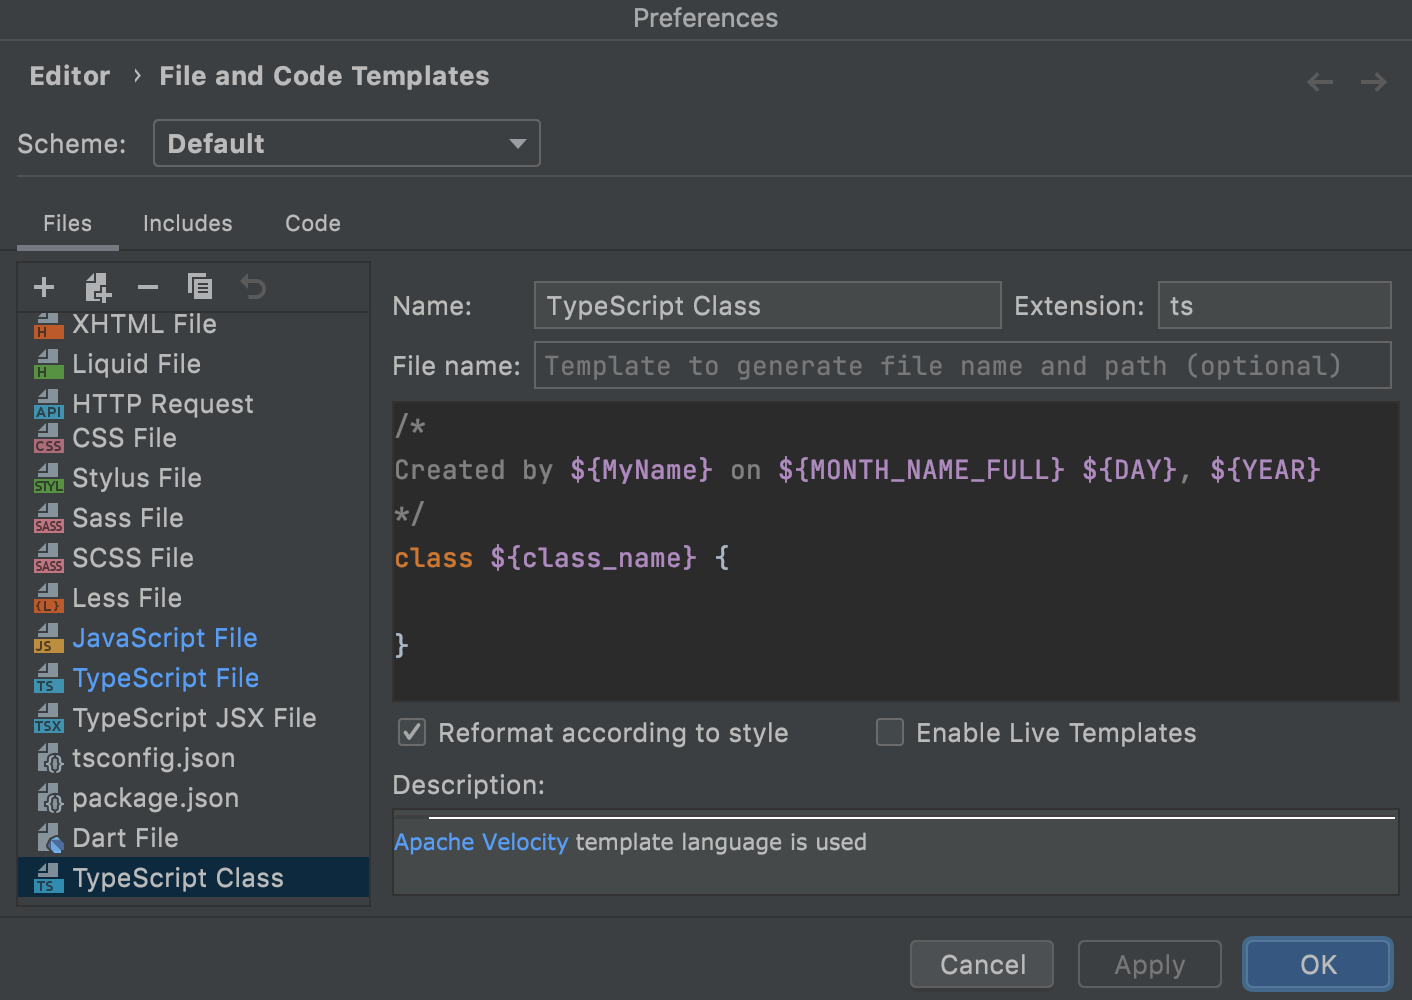 A custom template for creating a TypeScript class